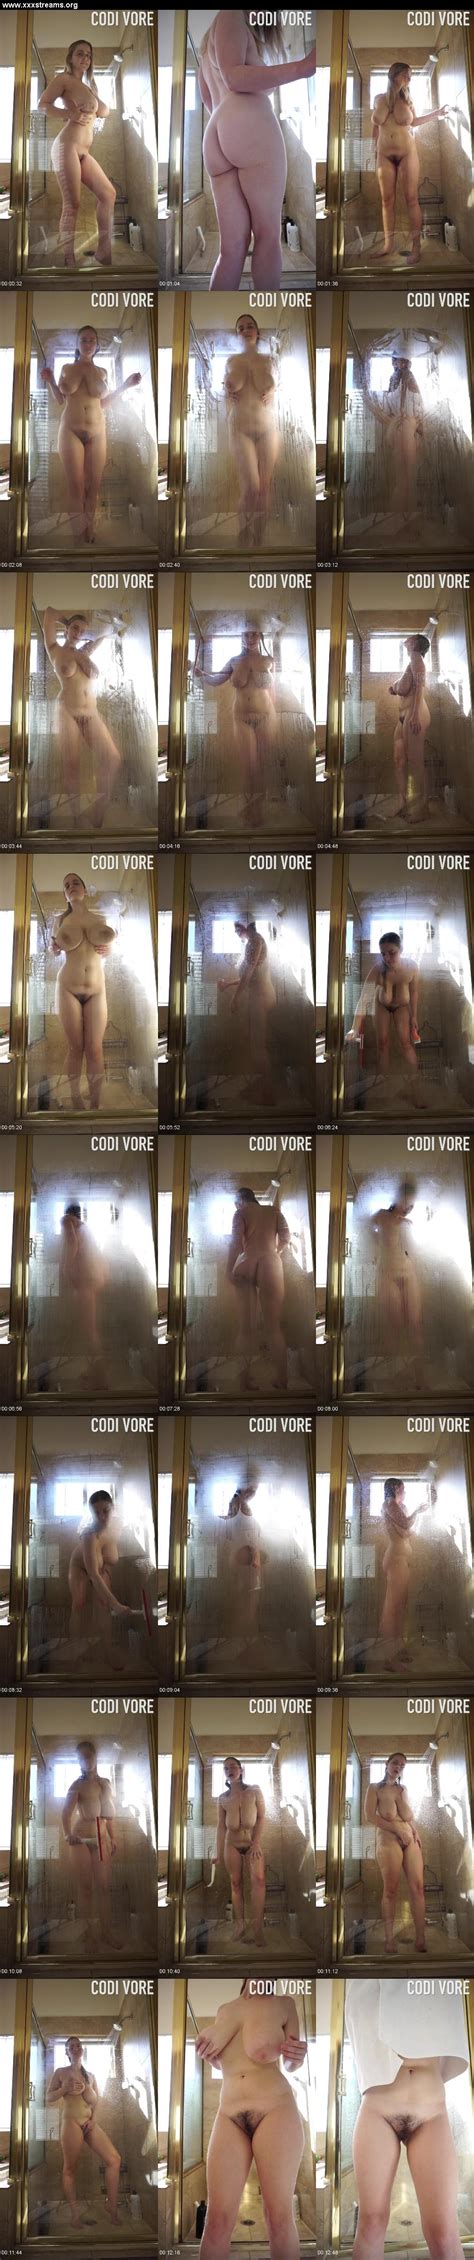 [manyvids] codi vore steamy body glass shower 1080p